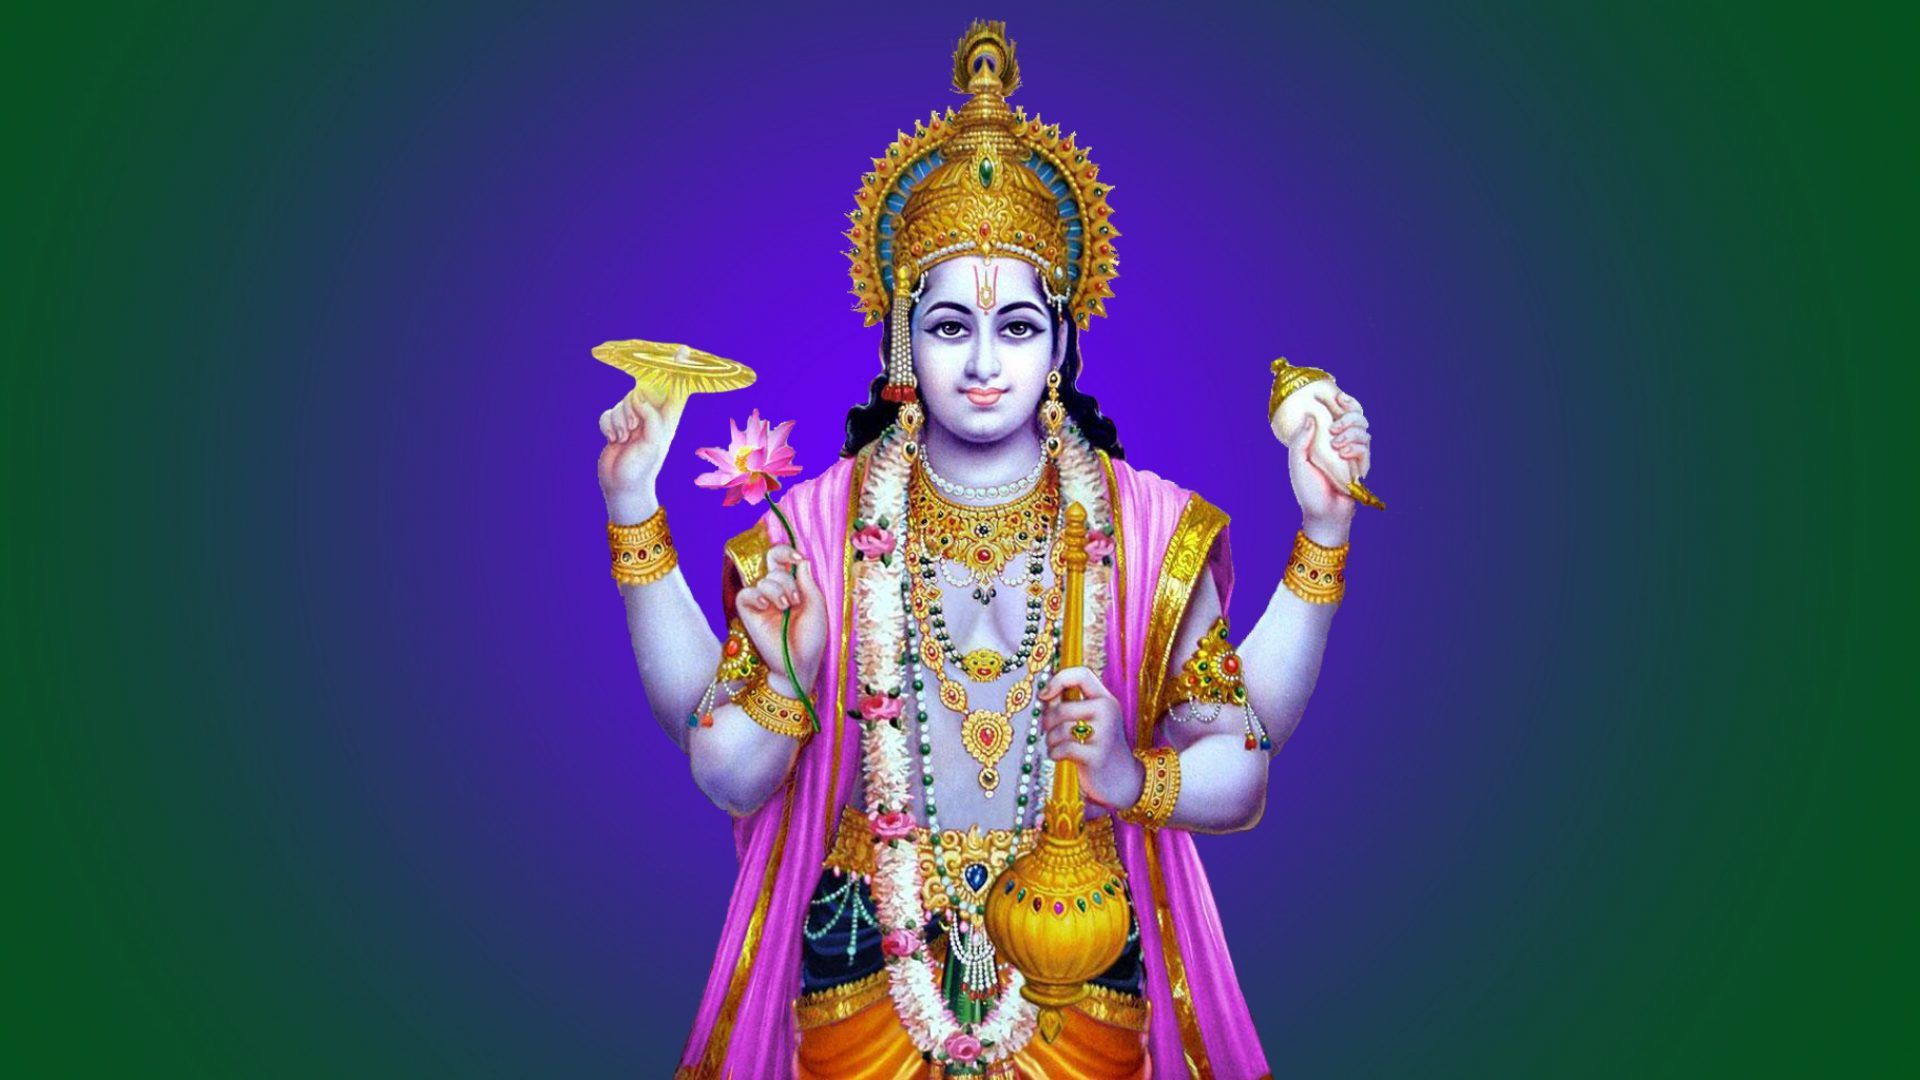 Lord Vishnu Image High Resolution. Hindu Gods and Goddesses